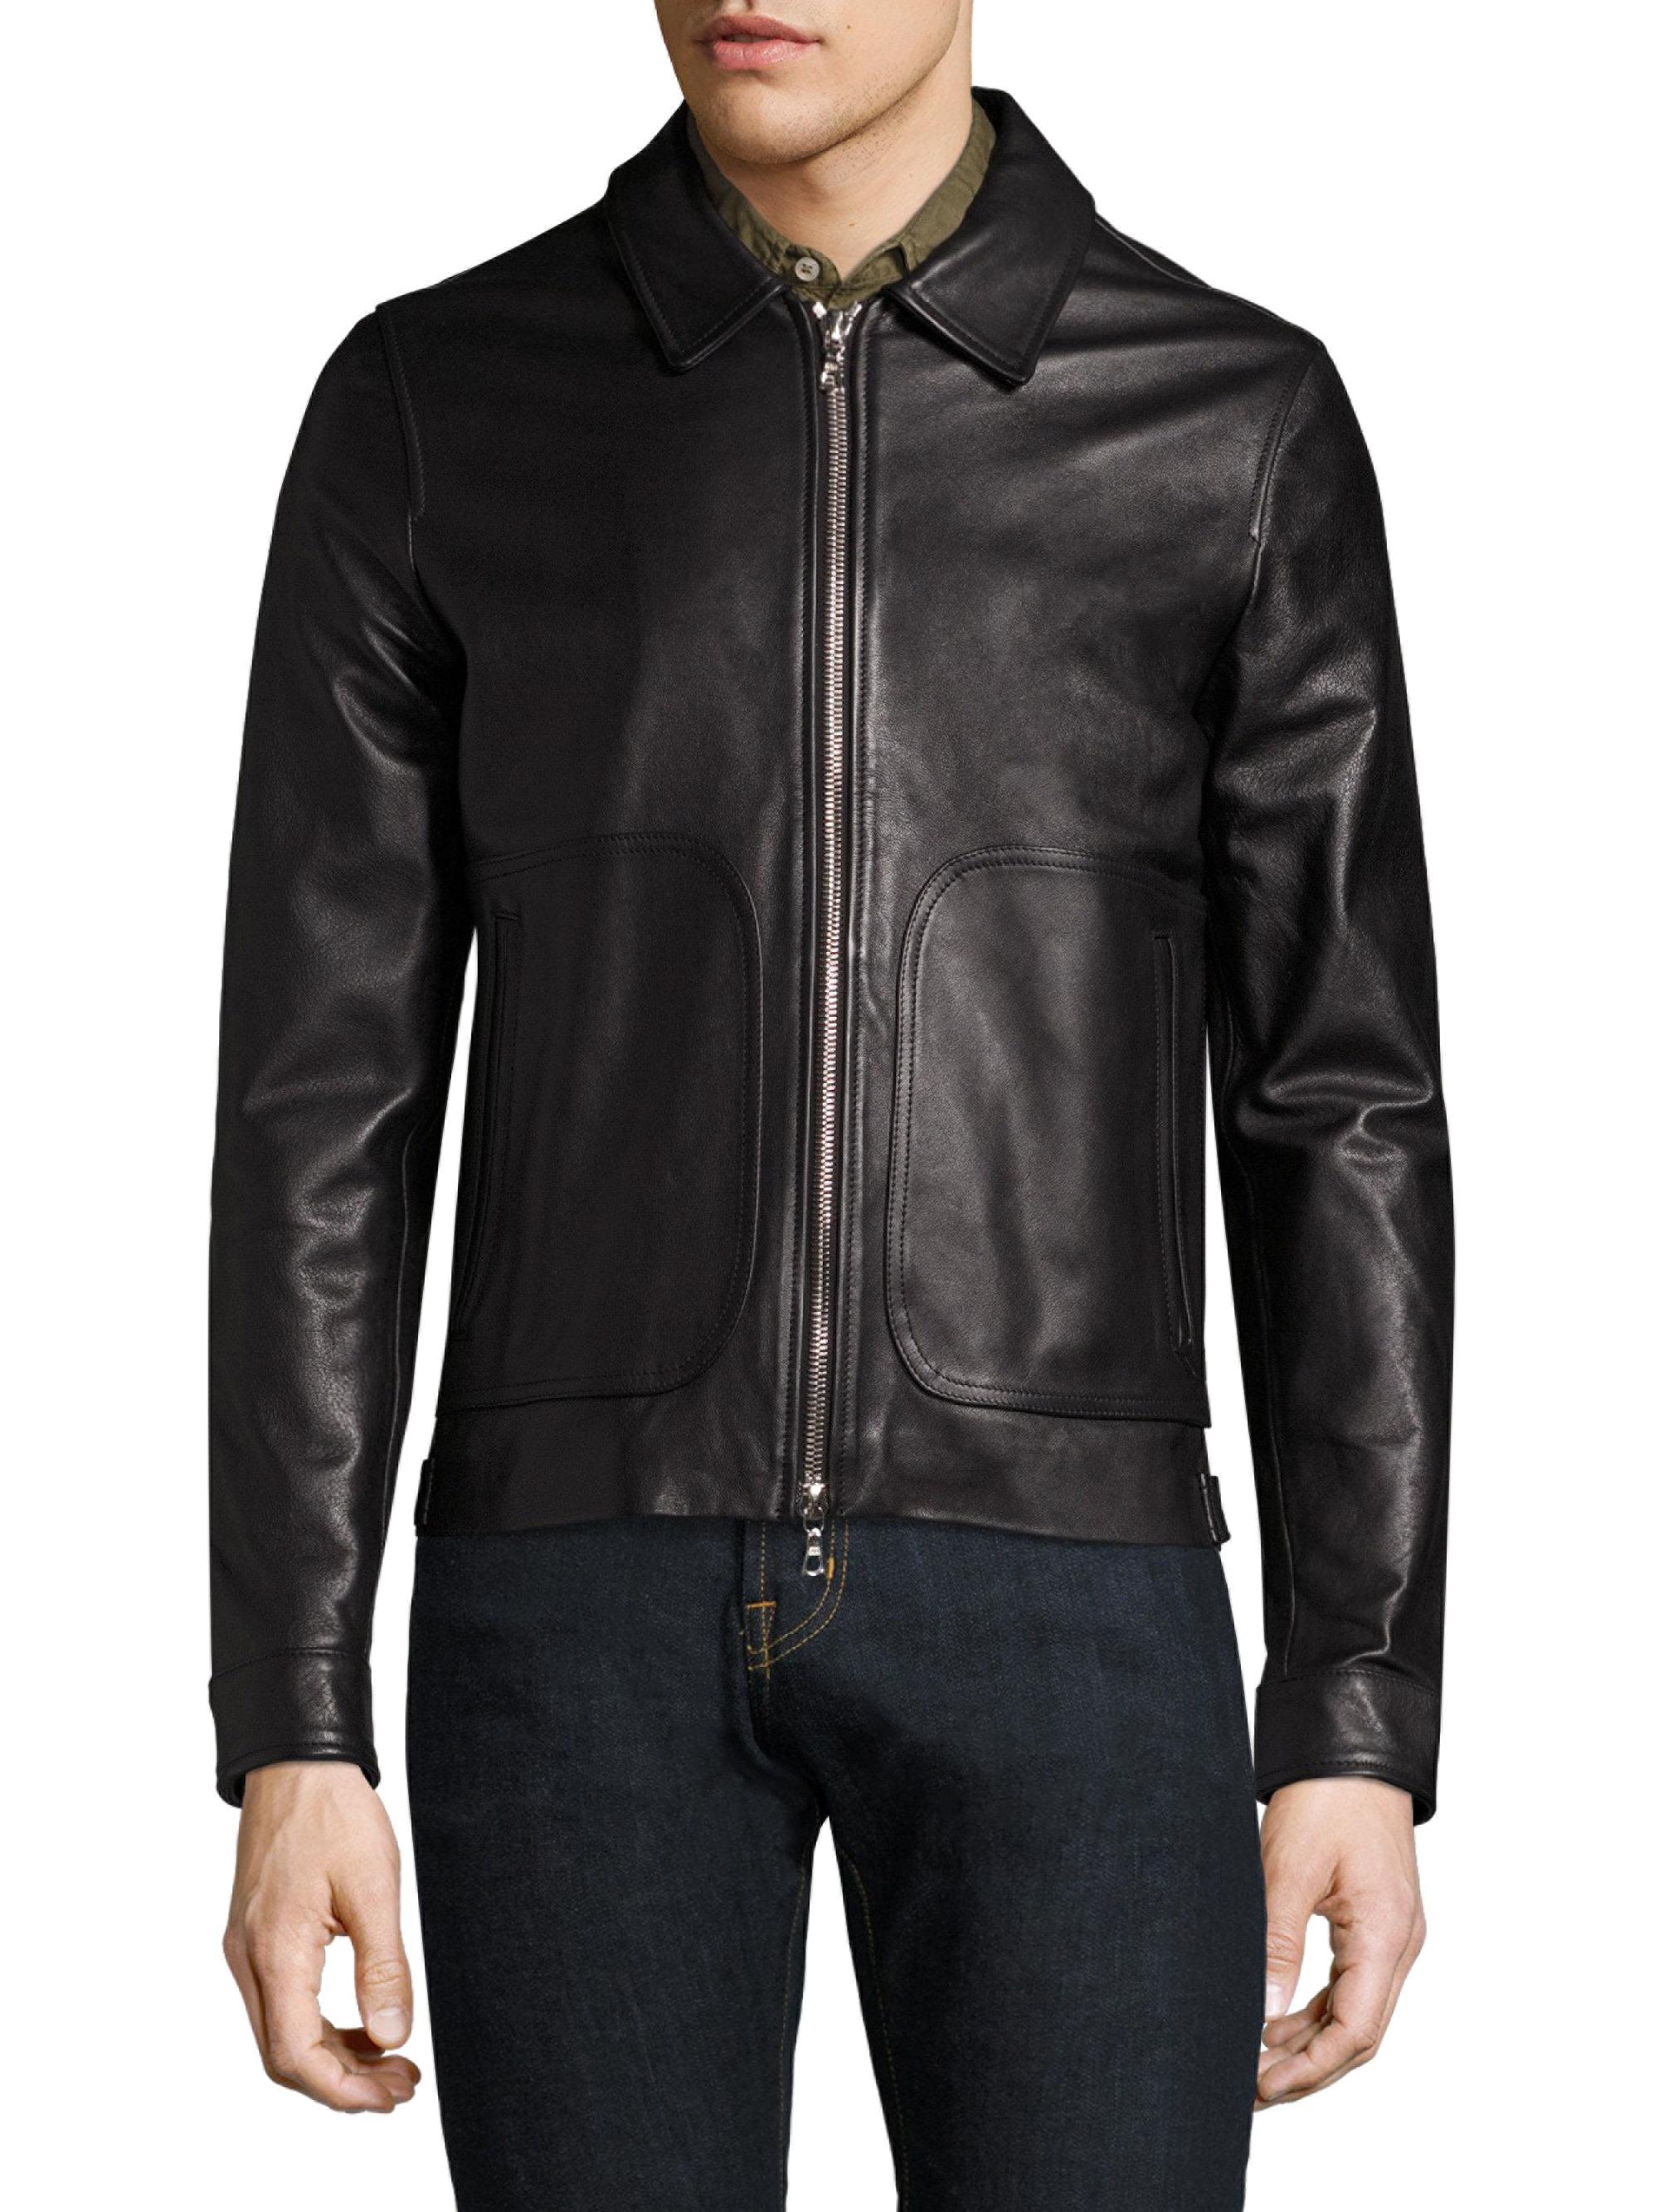 Officine Generale Clement Leather Jacket in Black for Men - Lyst